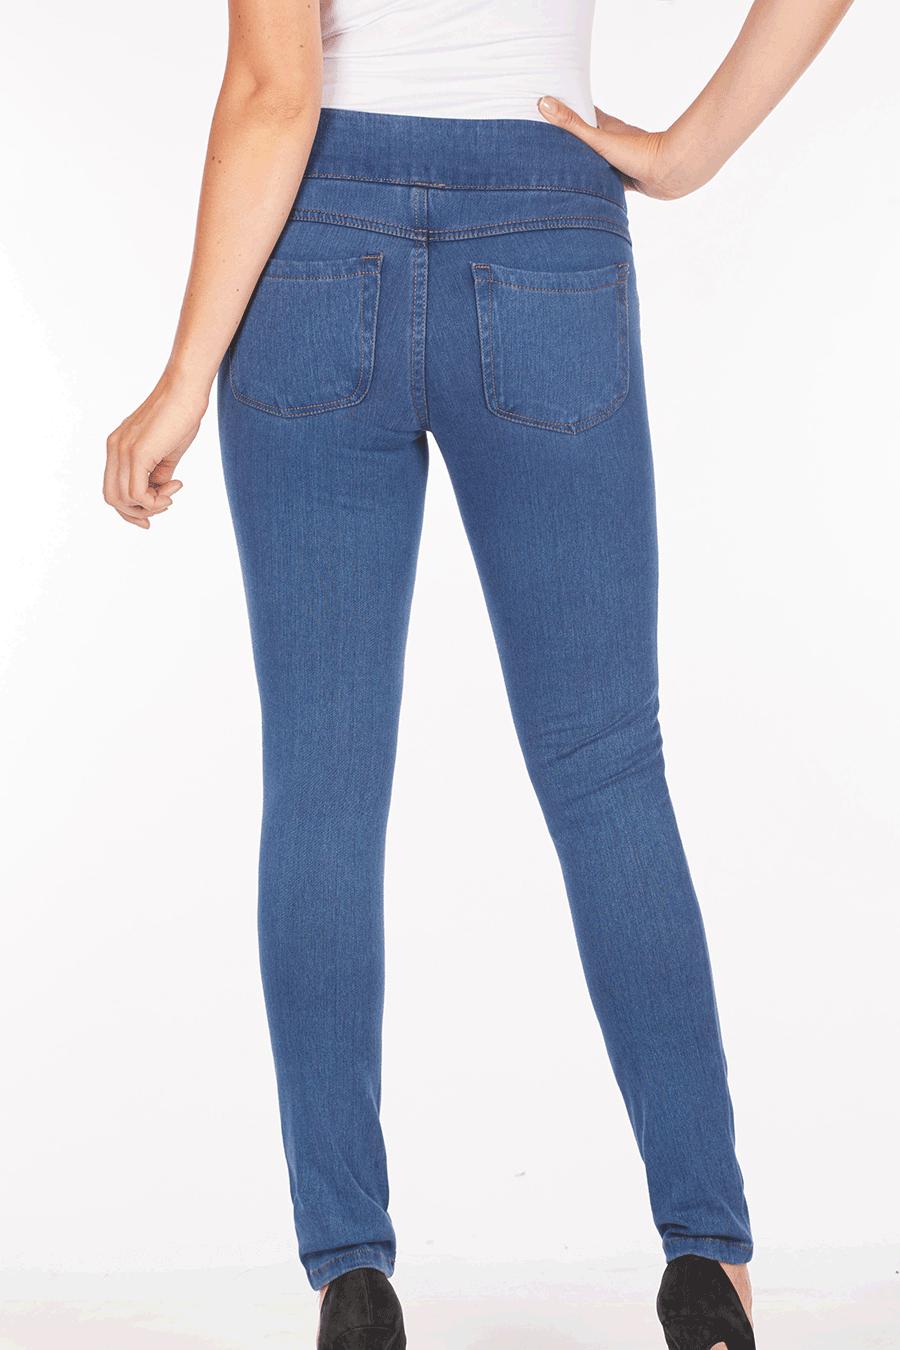 French Dressing Jeans Pull-On Slim Jegging LOVE Denim 